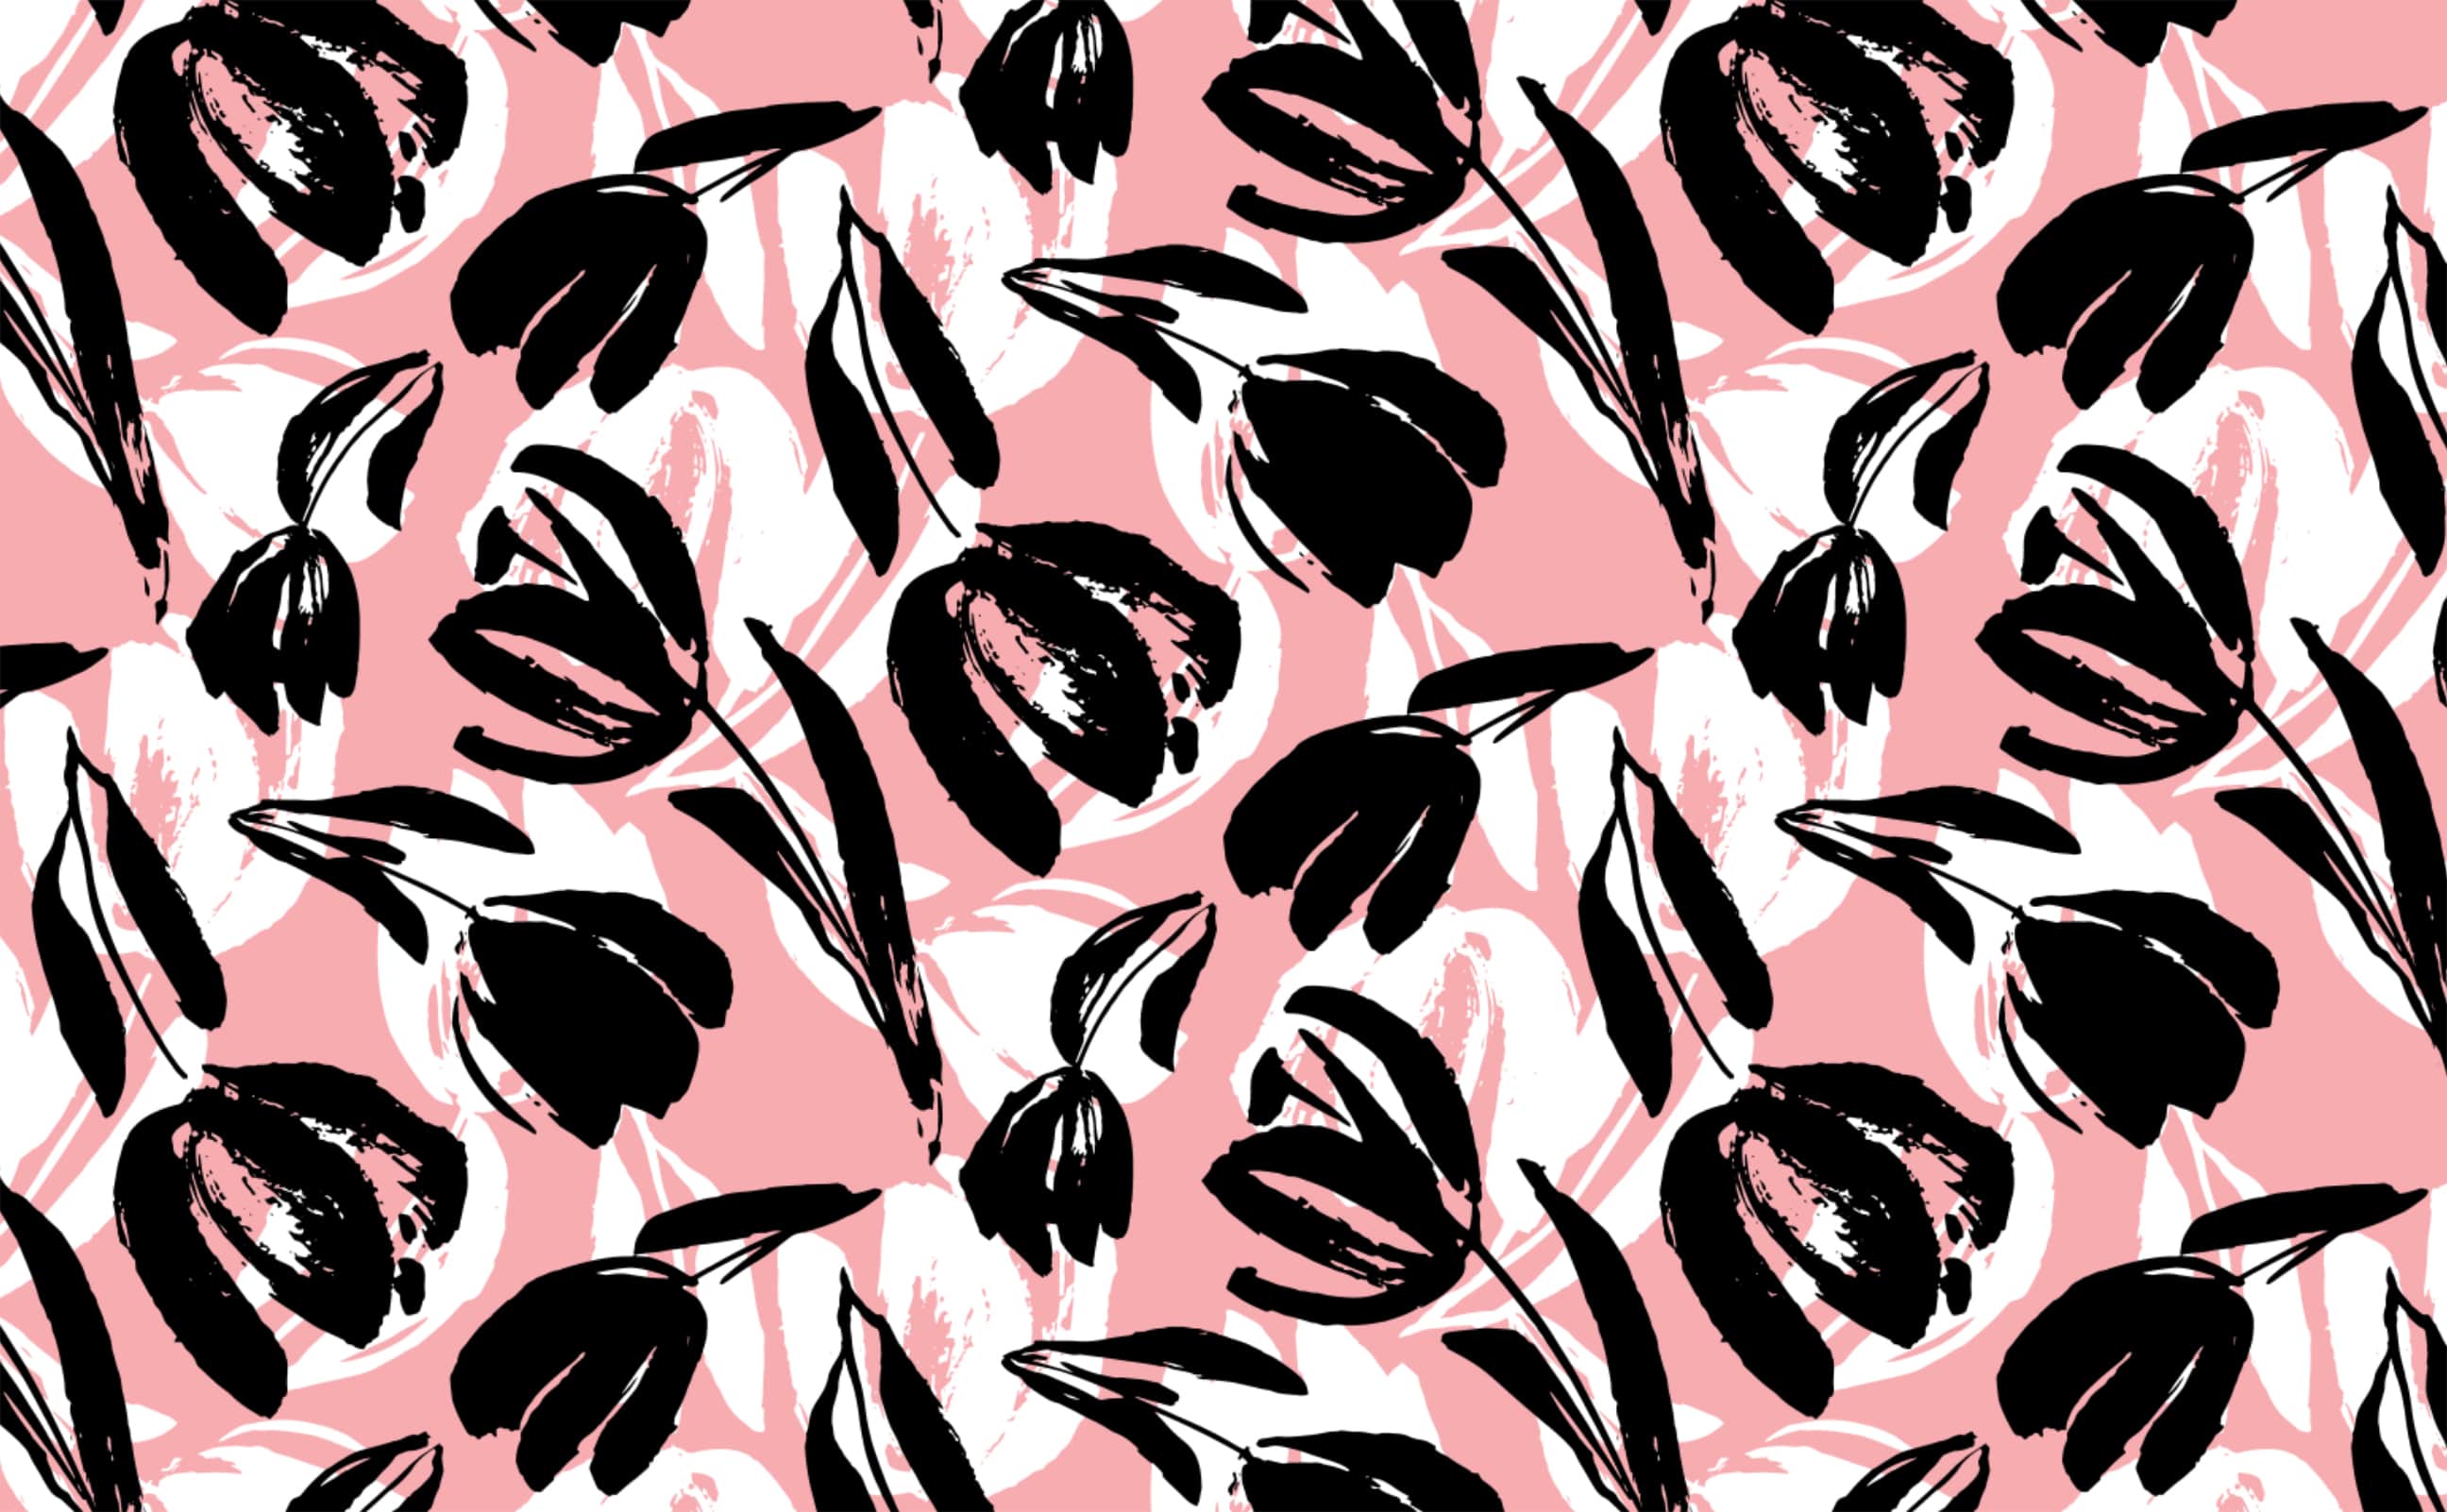 Pink flower in black background photo  Free Wallpaper Image on Unsplash